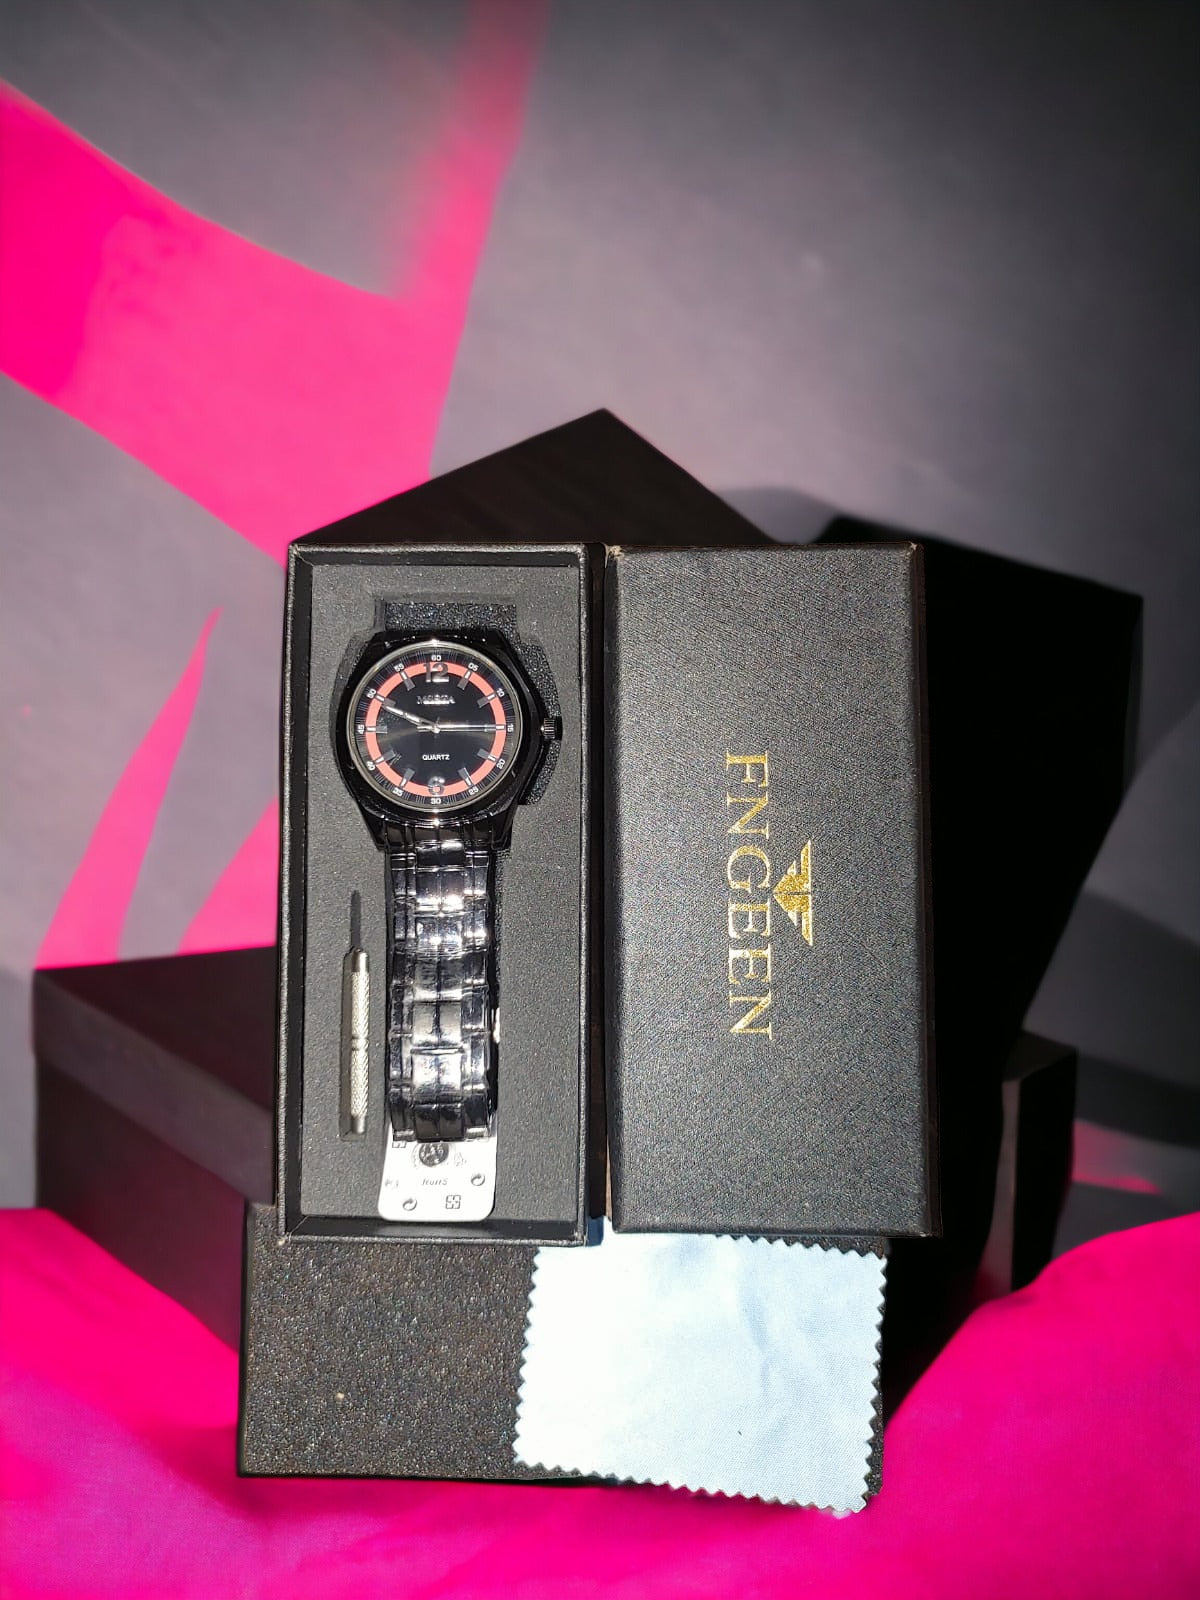 Imported Jet Black Watch for Timeless Elegance for men - Fashion Trident